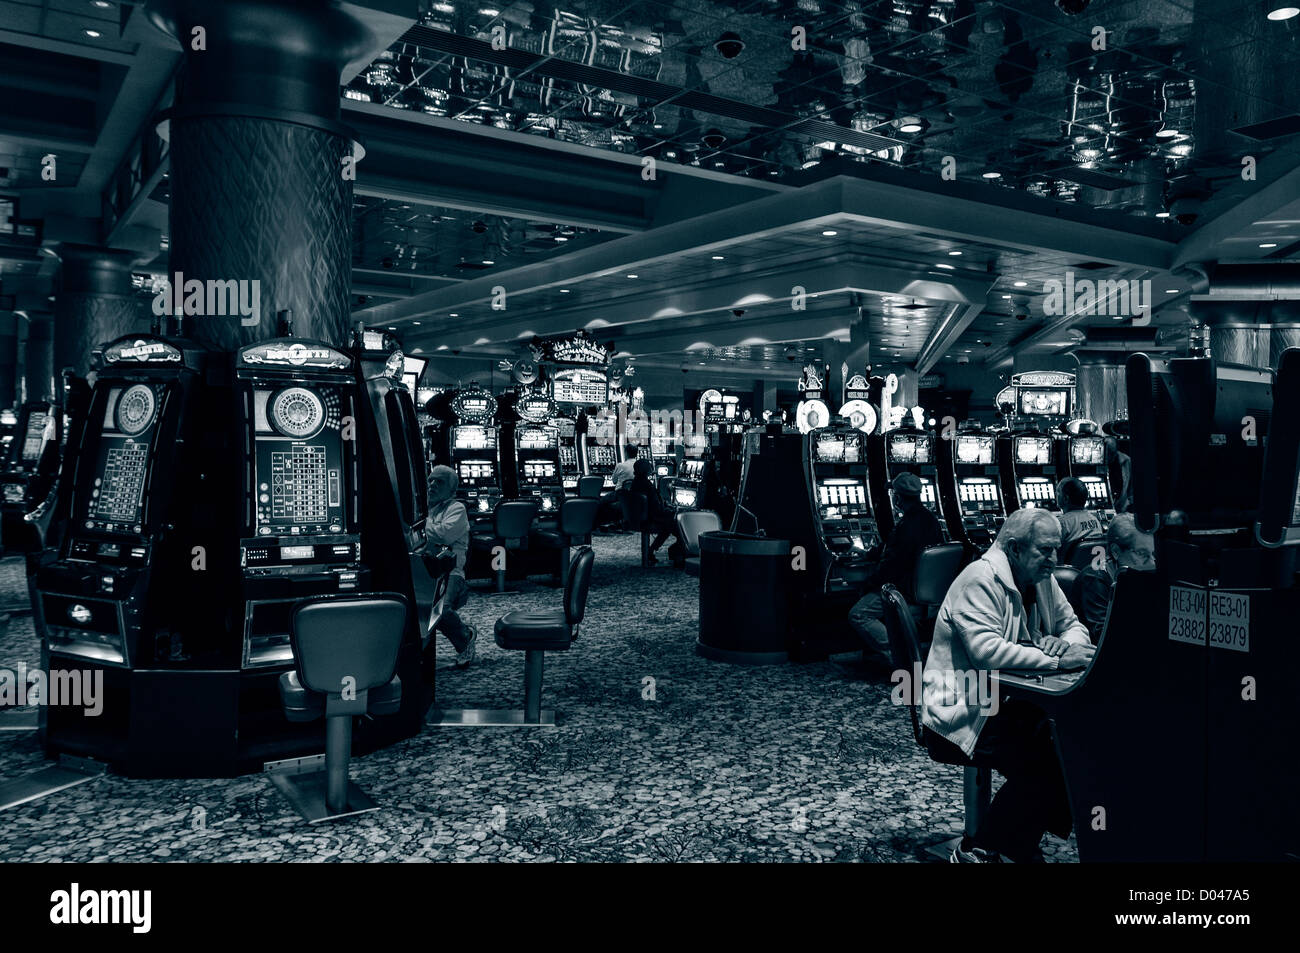 Men sit gambling at slot machines, Foxwoods Resort Casino interior, Ledyard, Connecticut, USA Stock Photo